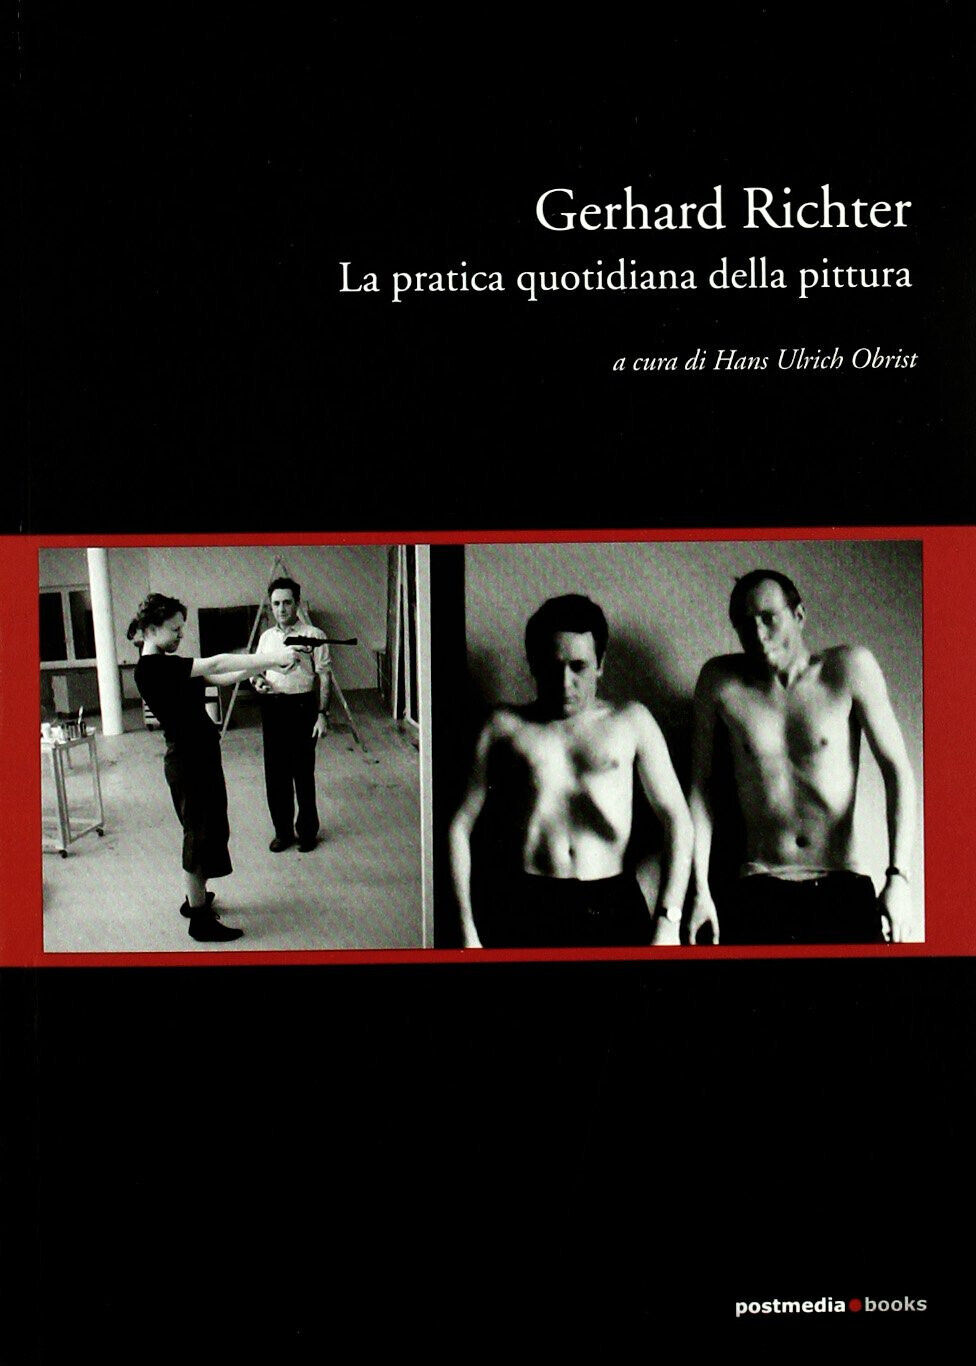 Gerhard Richter. La pratica quotidiana della pittura - H. U. Obrist - 2005